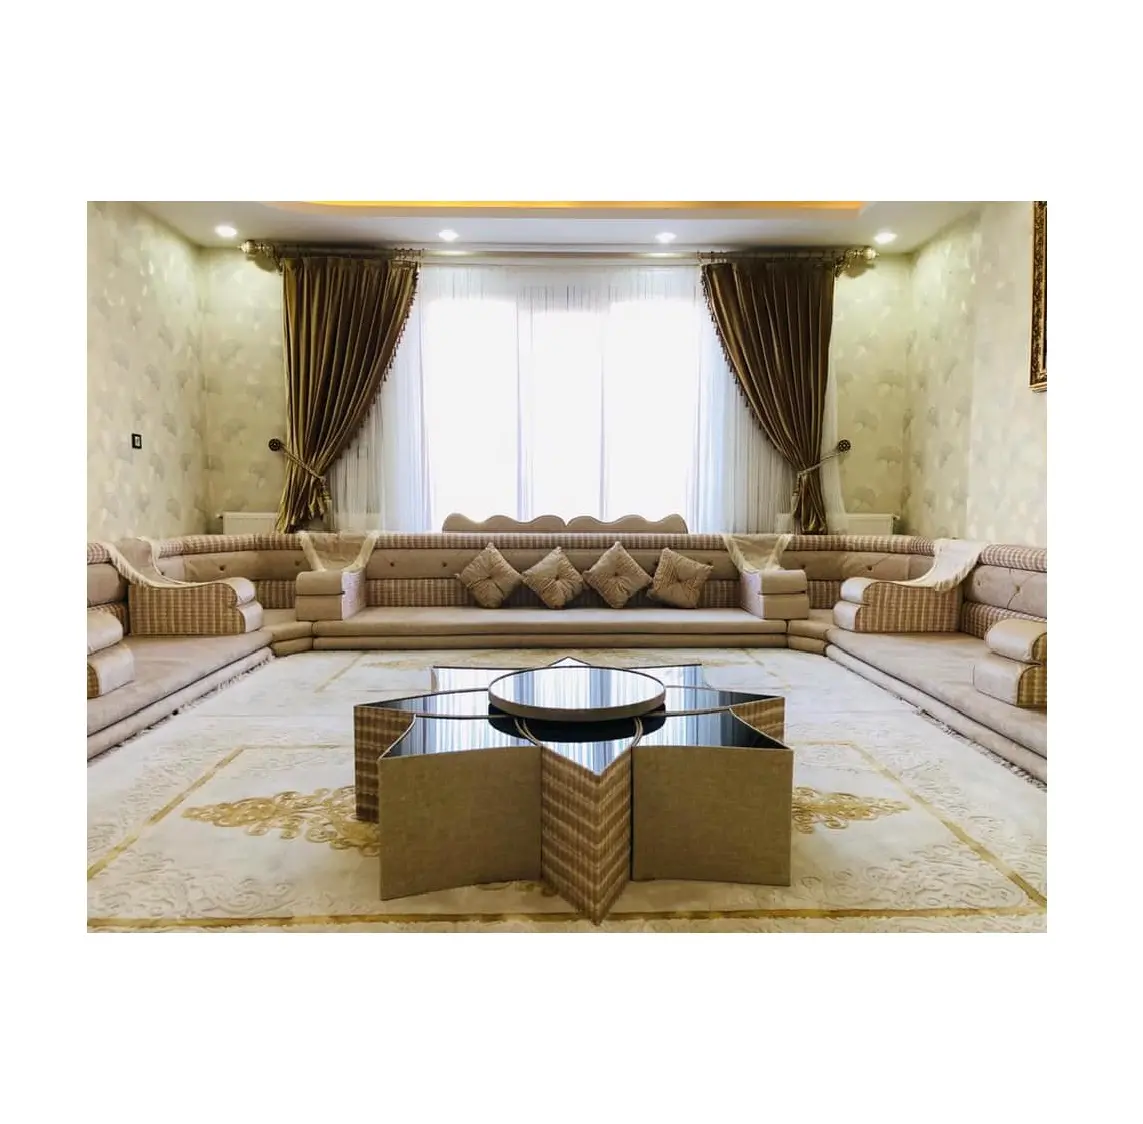 Ottoman estilo sofá árabe matrimónio oriental andar | sentado altura 15cm | sofá + tapete de lã + cortina + conjunto de mesa cheio